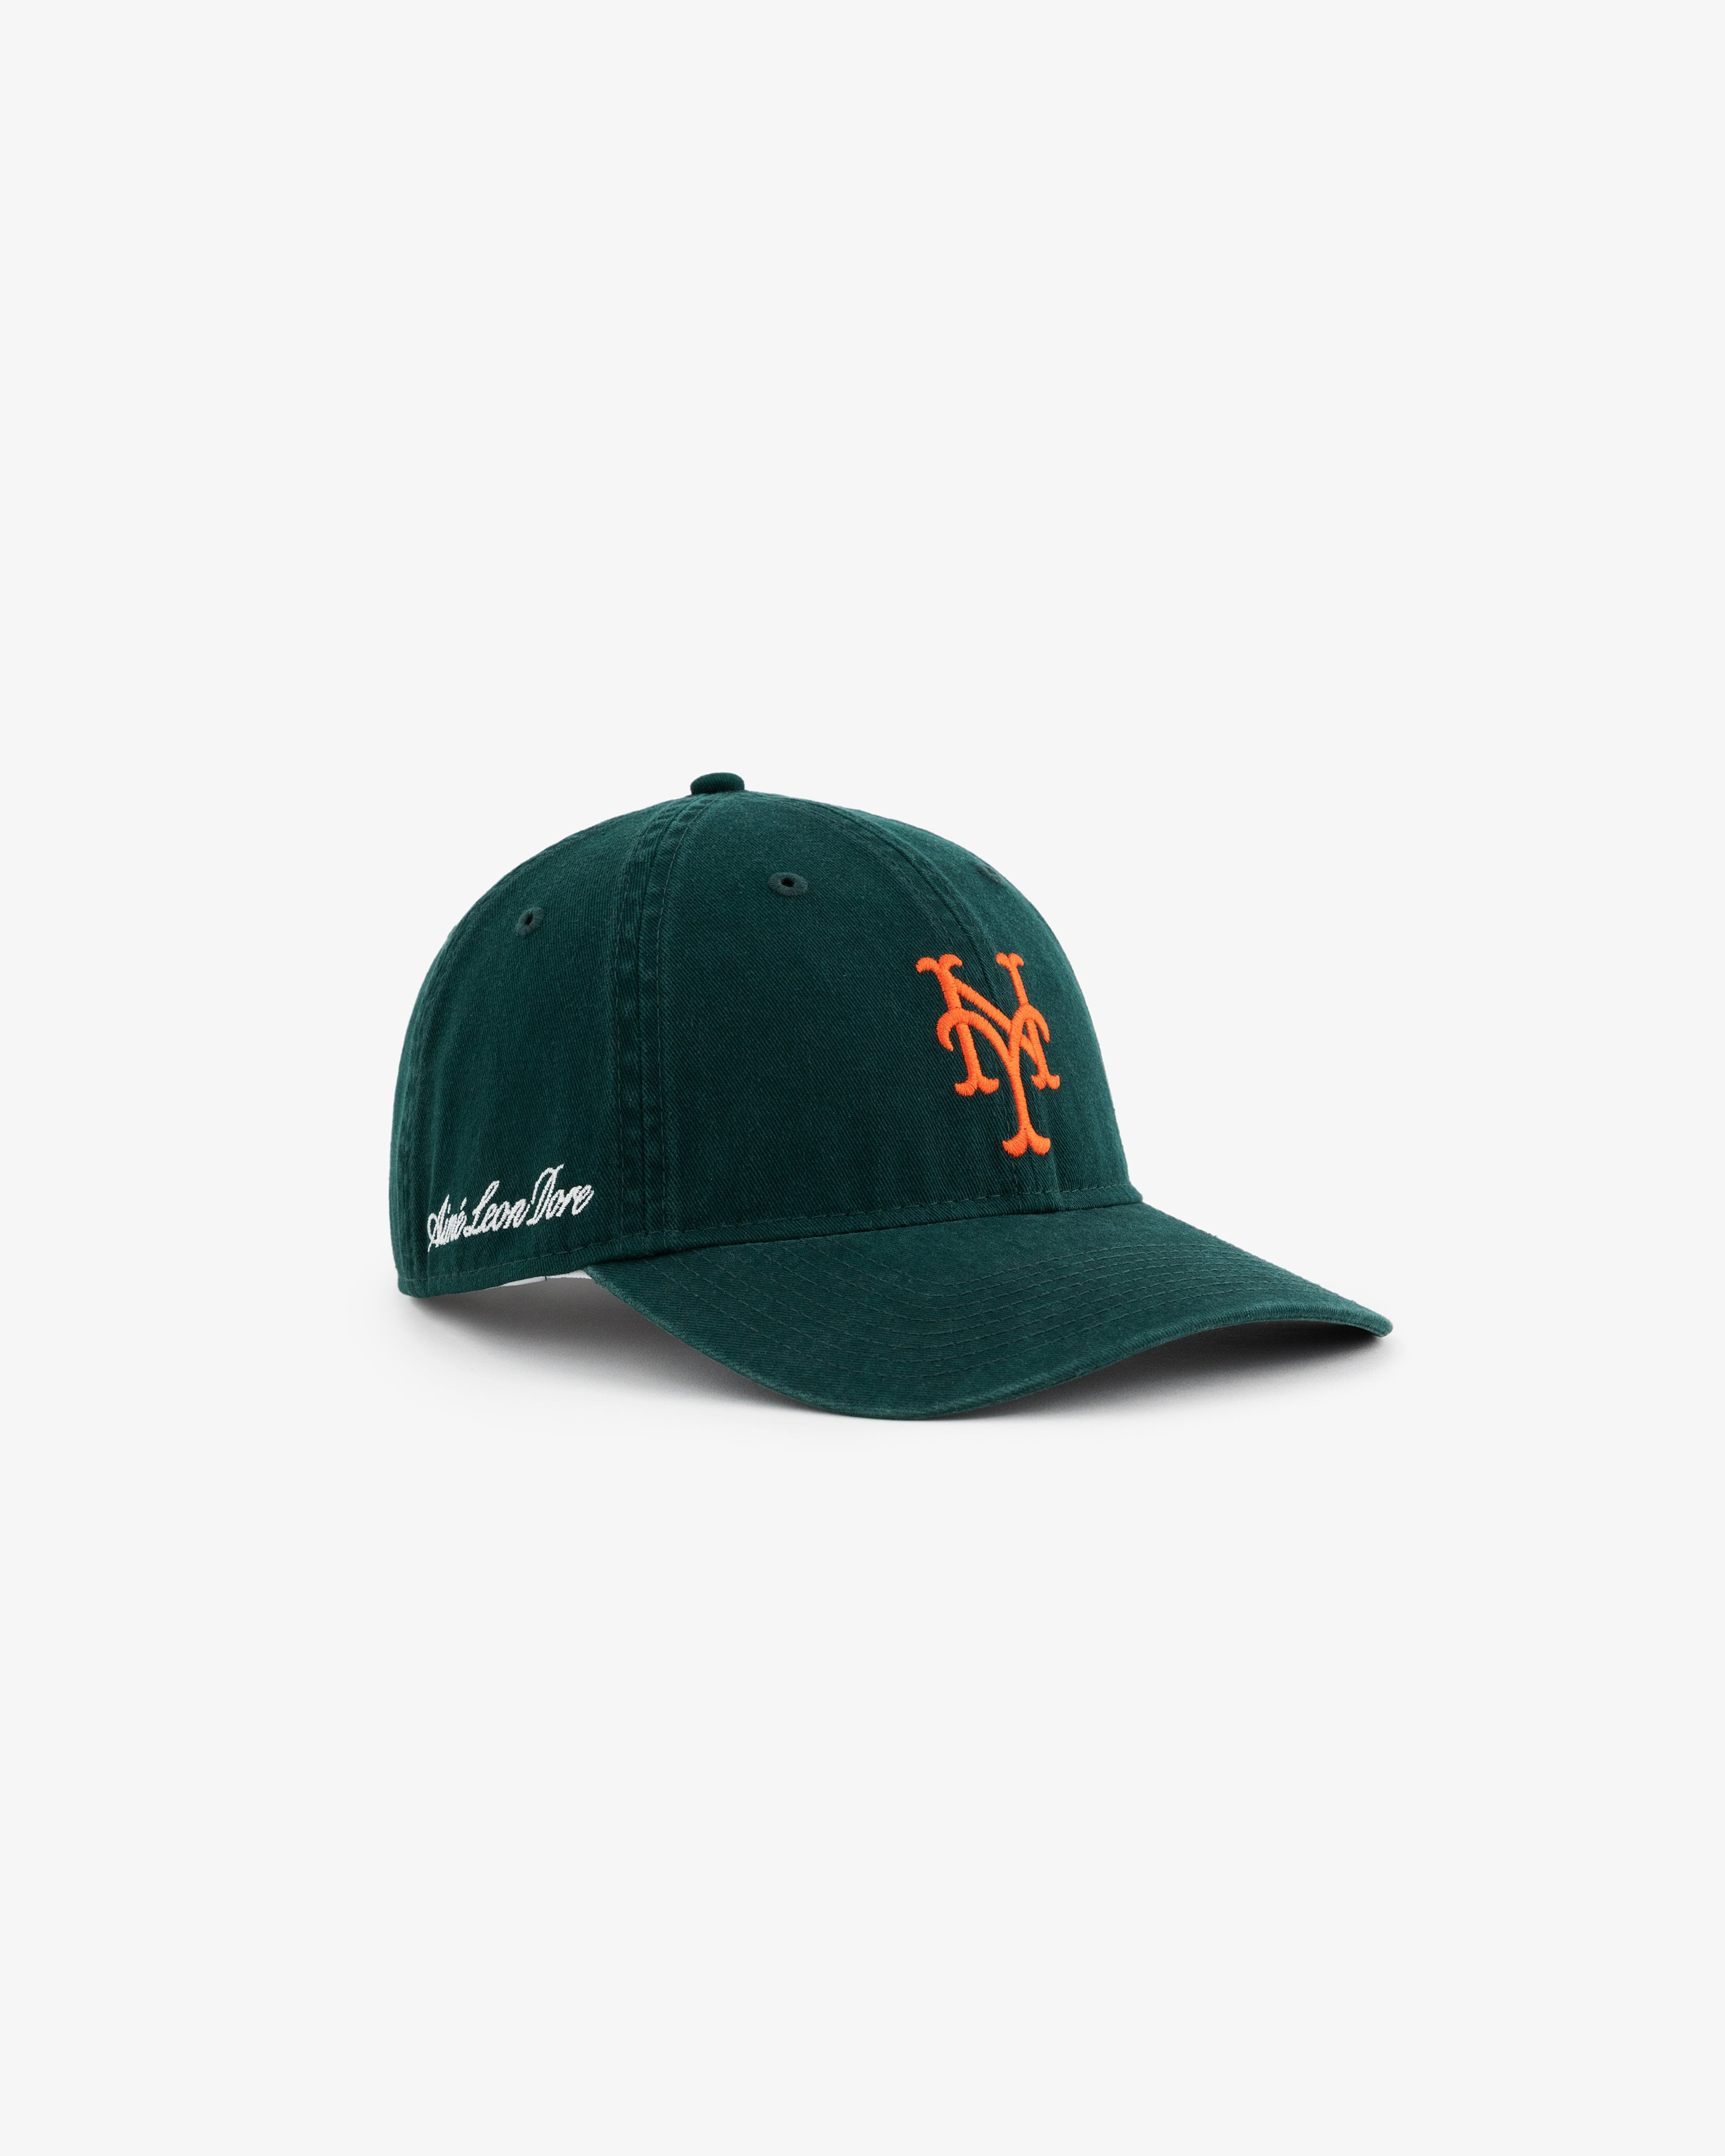 ALD / New Era Mets Ballpark Hat